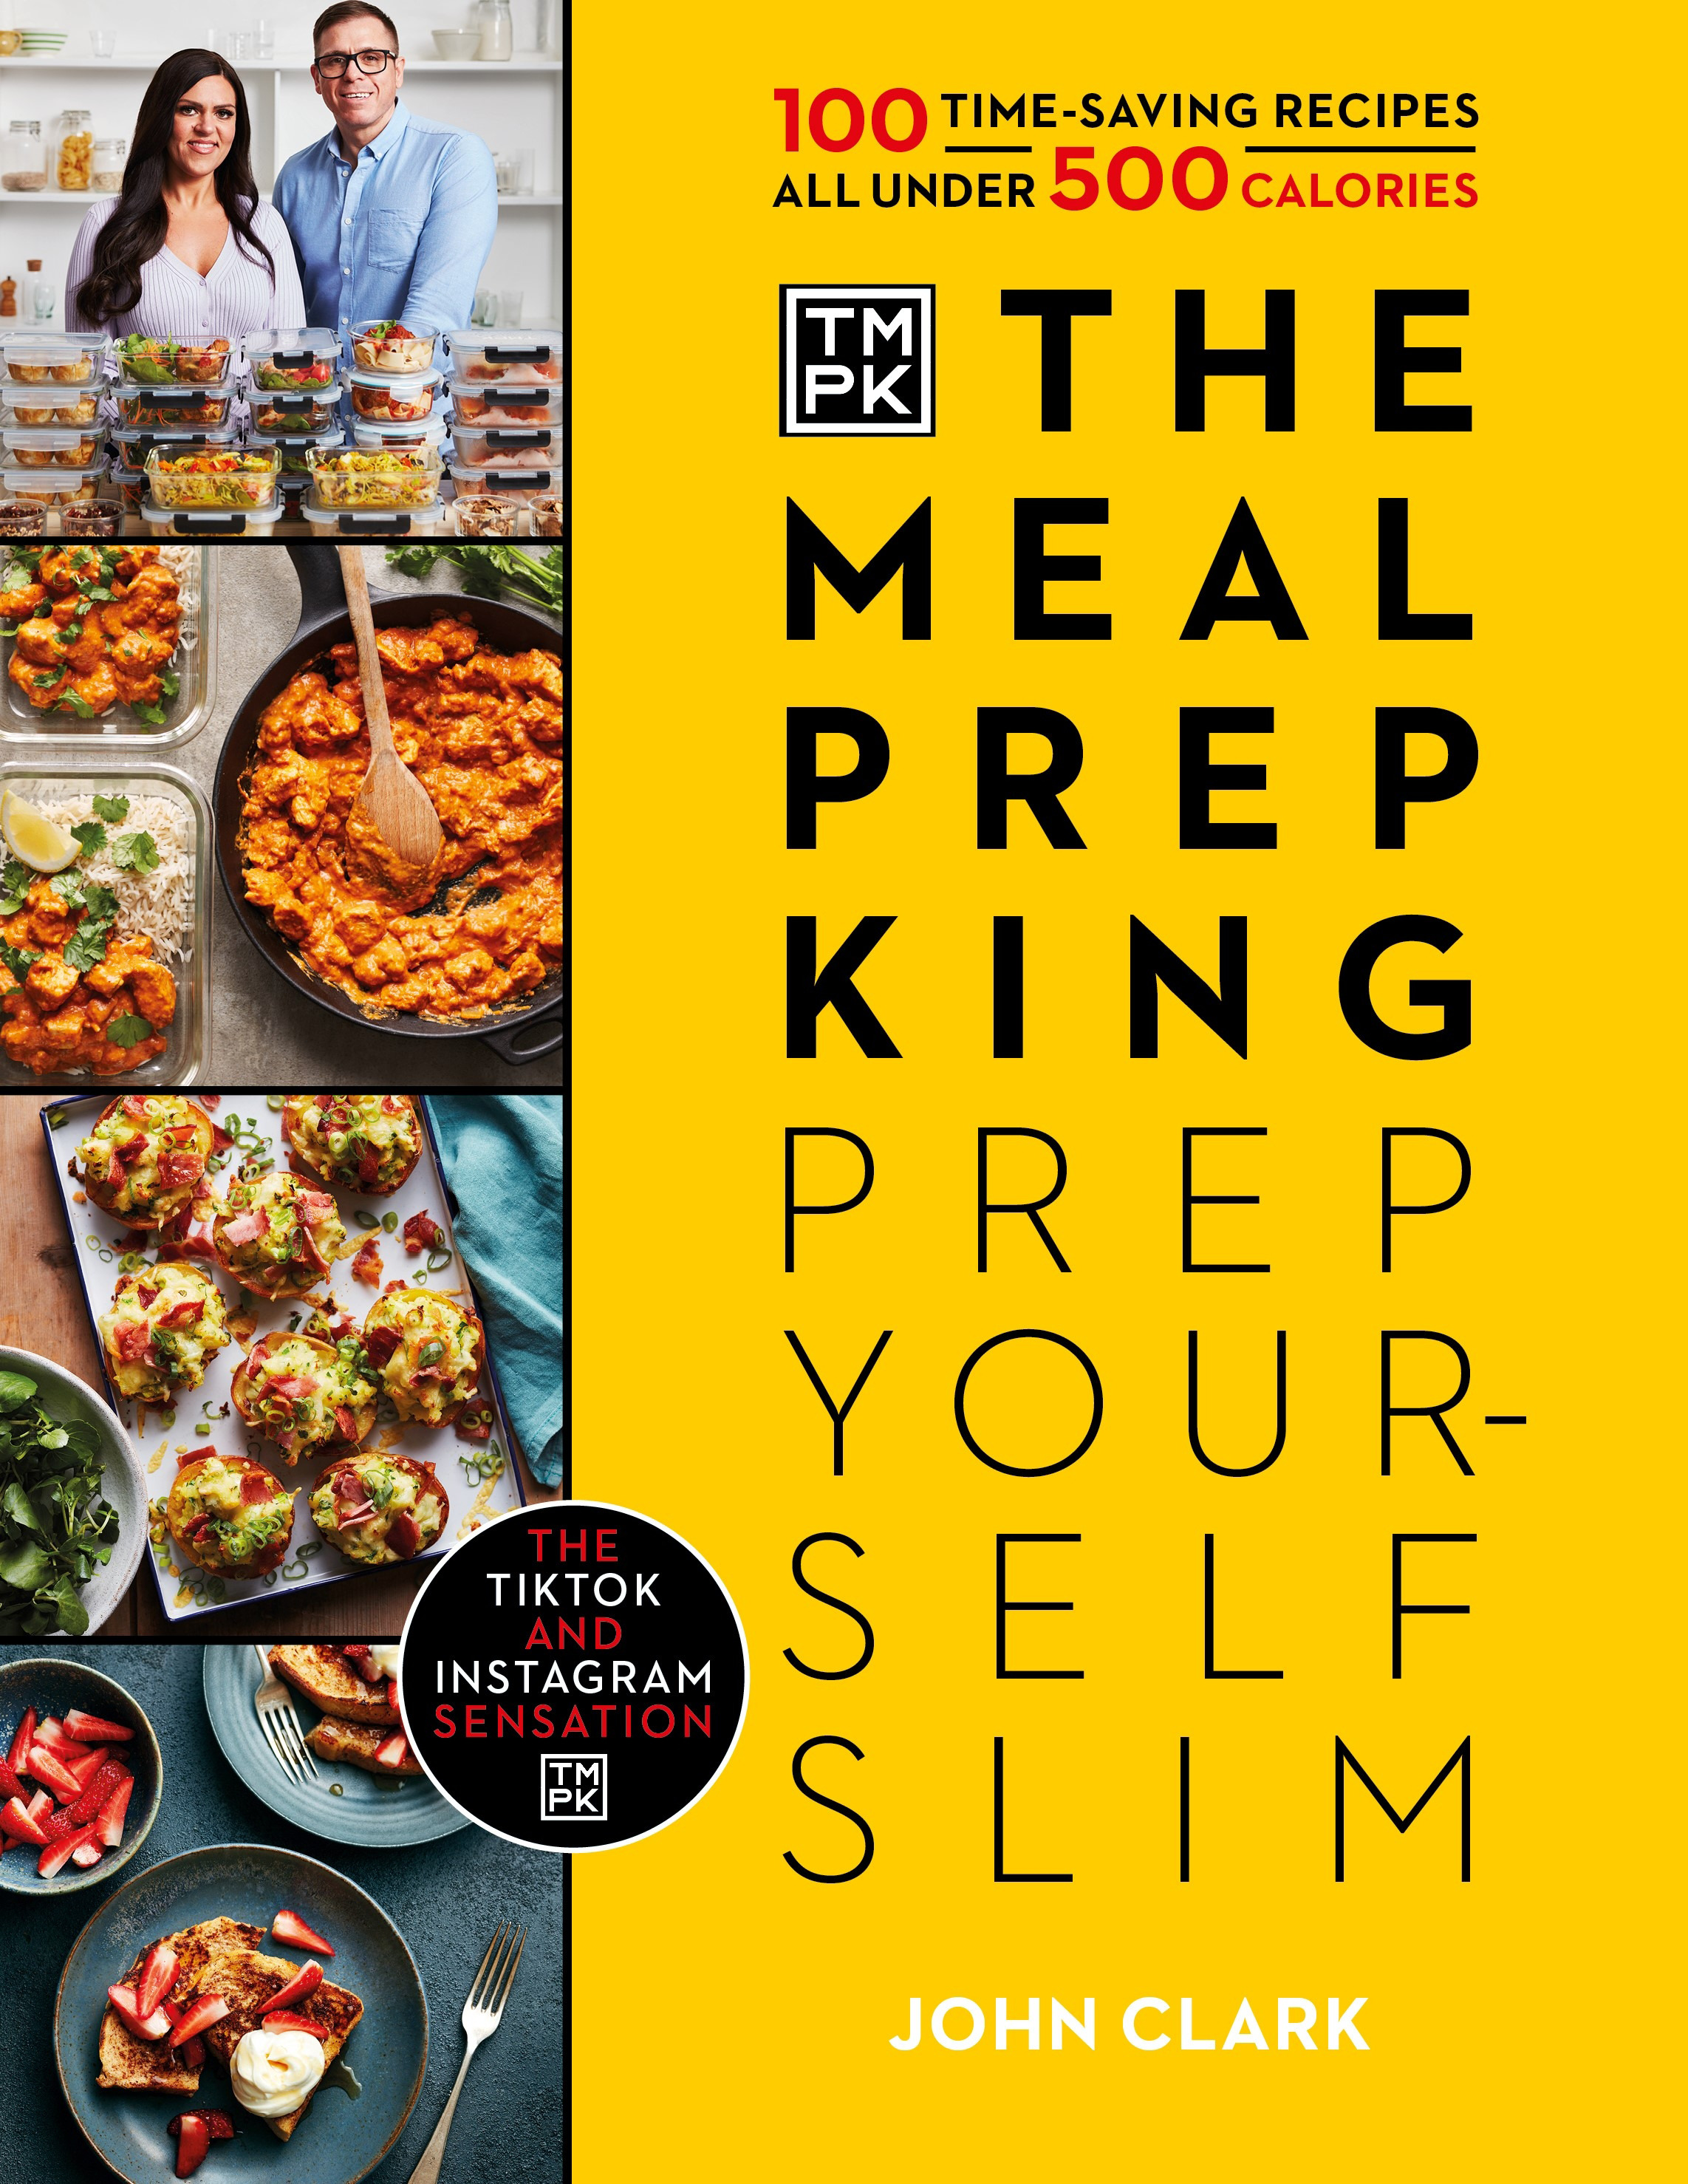 The Meal Prep King : Prep Yourself Slim | King, Meal Prep